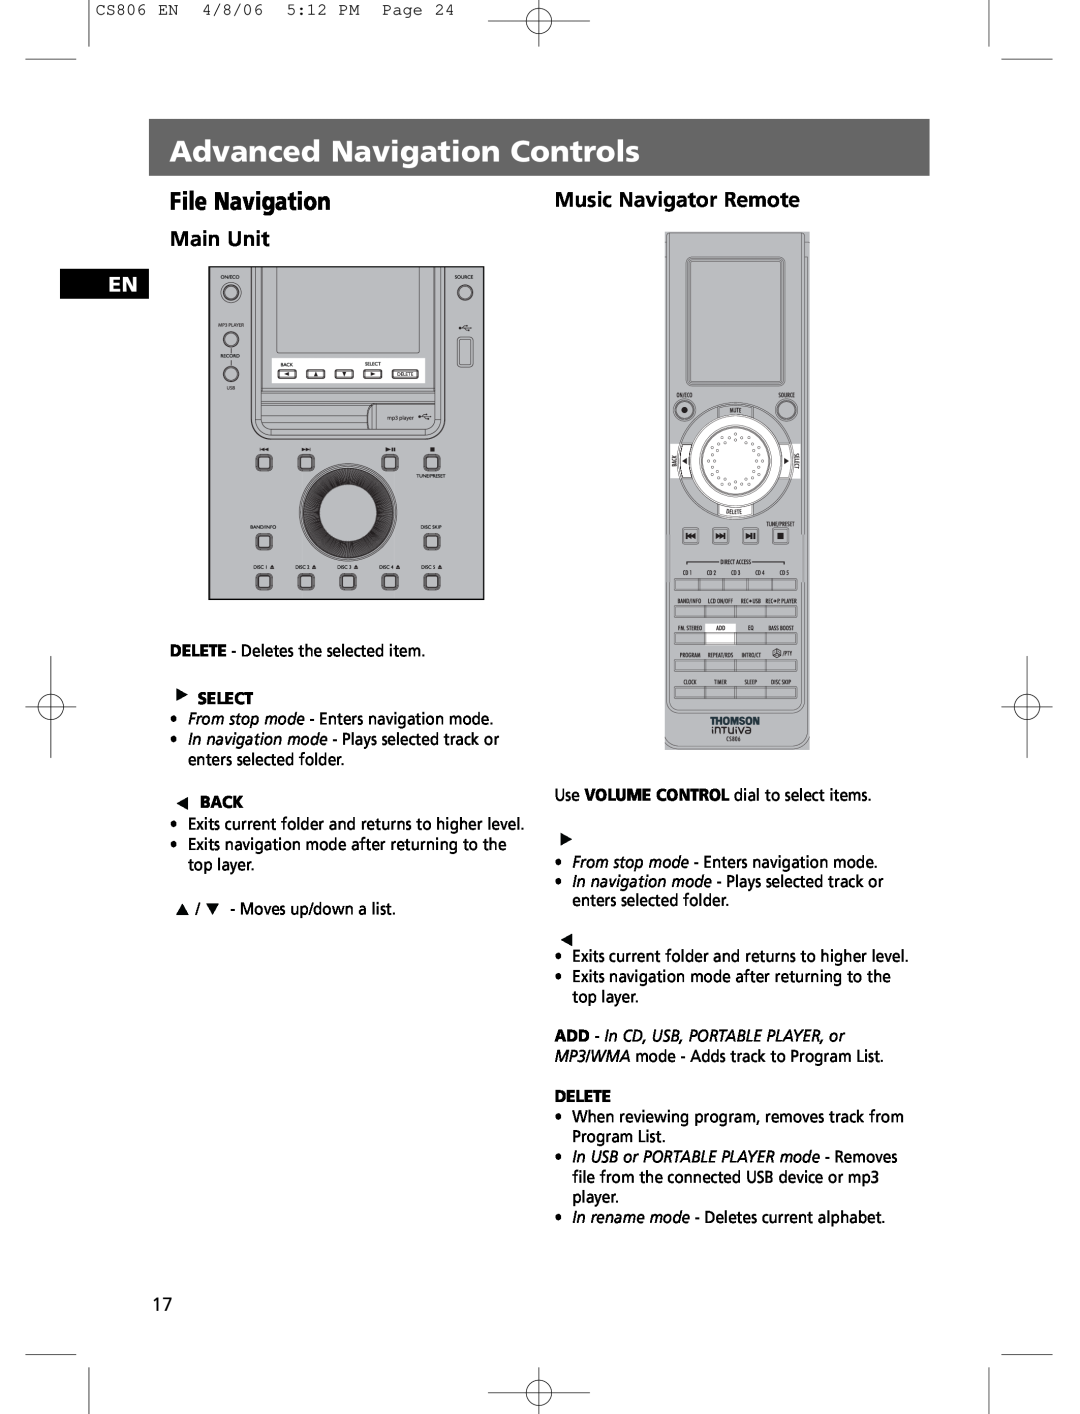 Technicolor - Thomson CS806 user manual Advanced Navigation Controls, File Navigation 